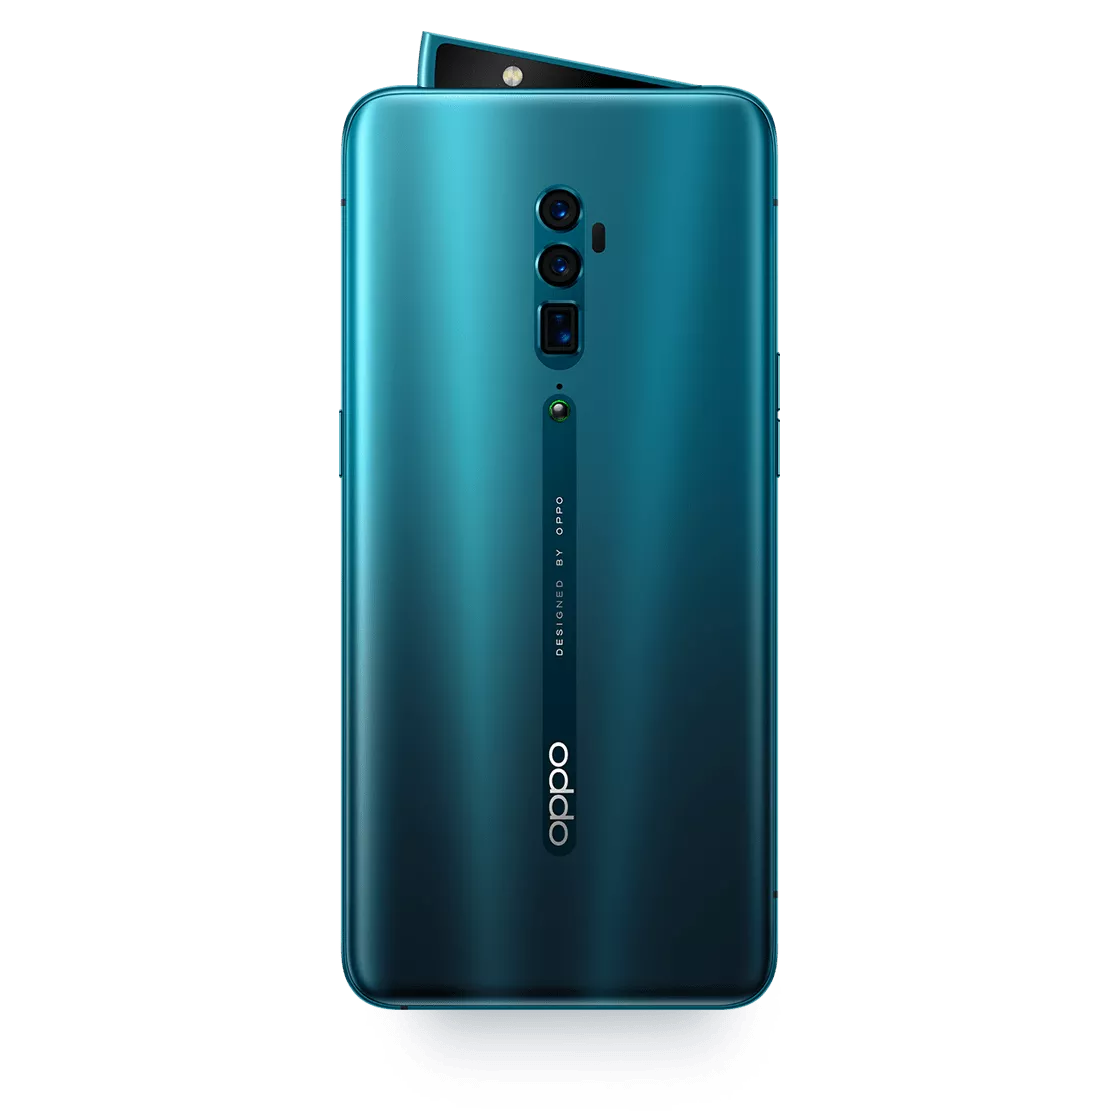 Oppo Reno 10x zoom specs, review, release date - PhonesData